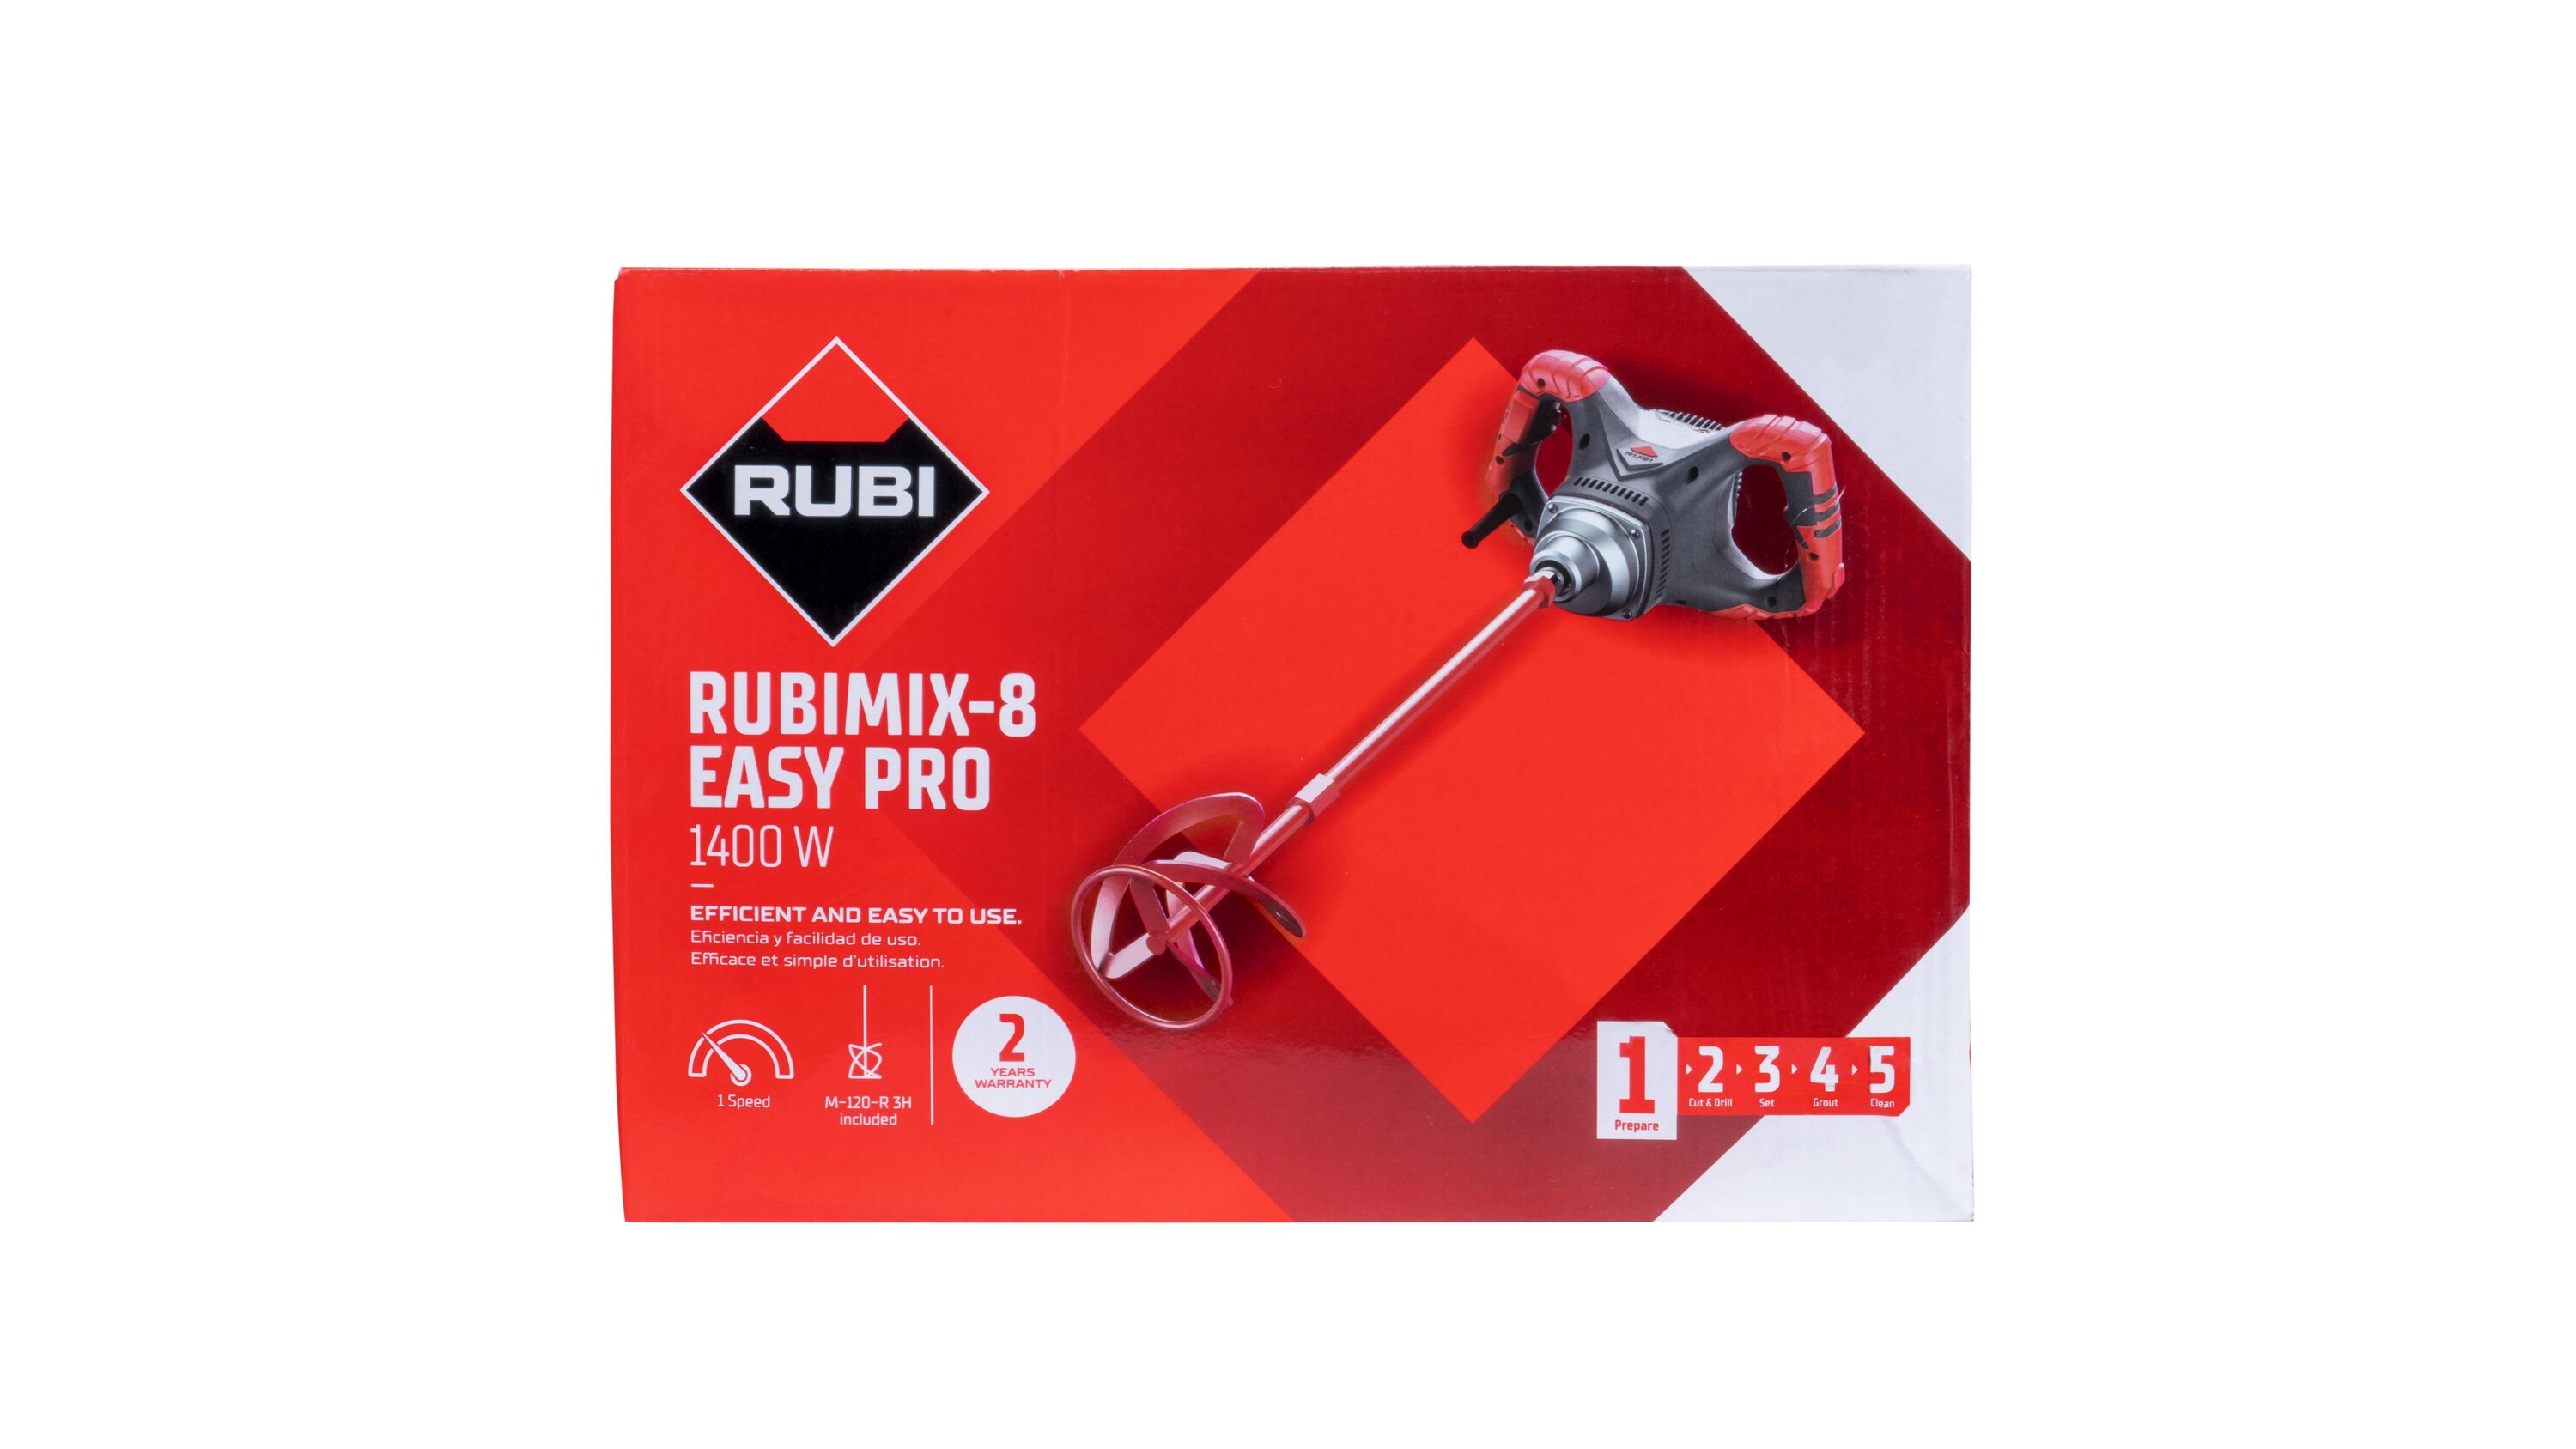 Rubi Tools Mortar Mixer Paddle M-120-R 3H Long